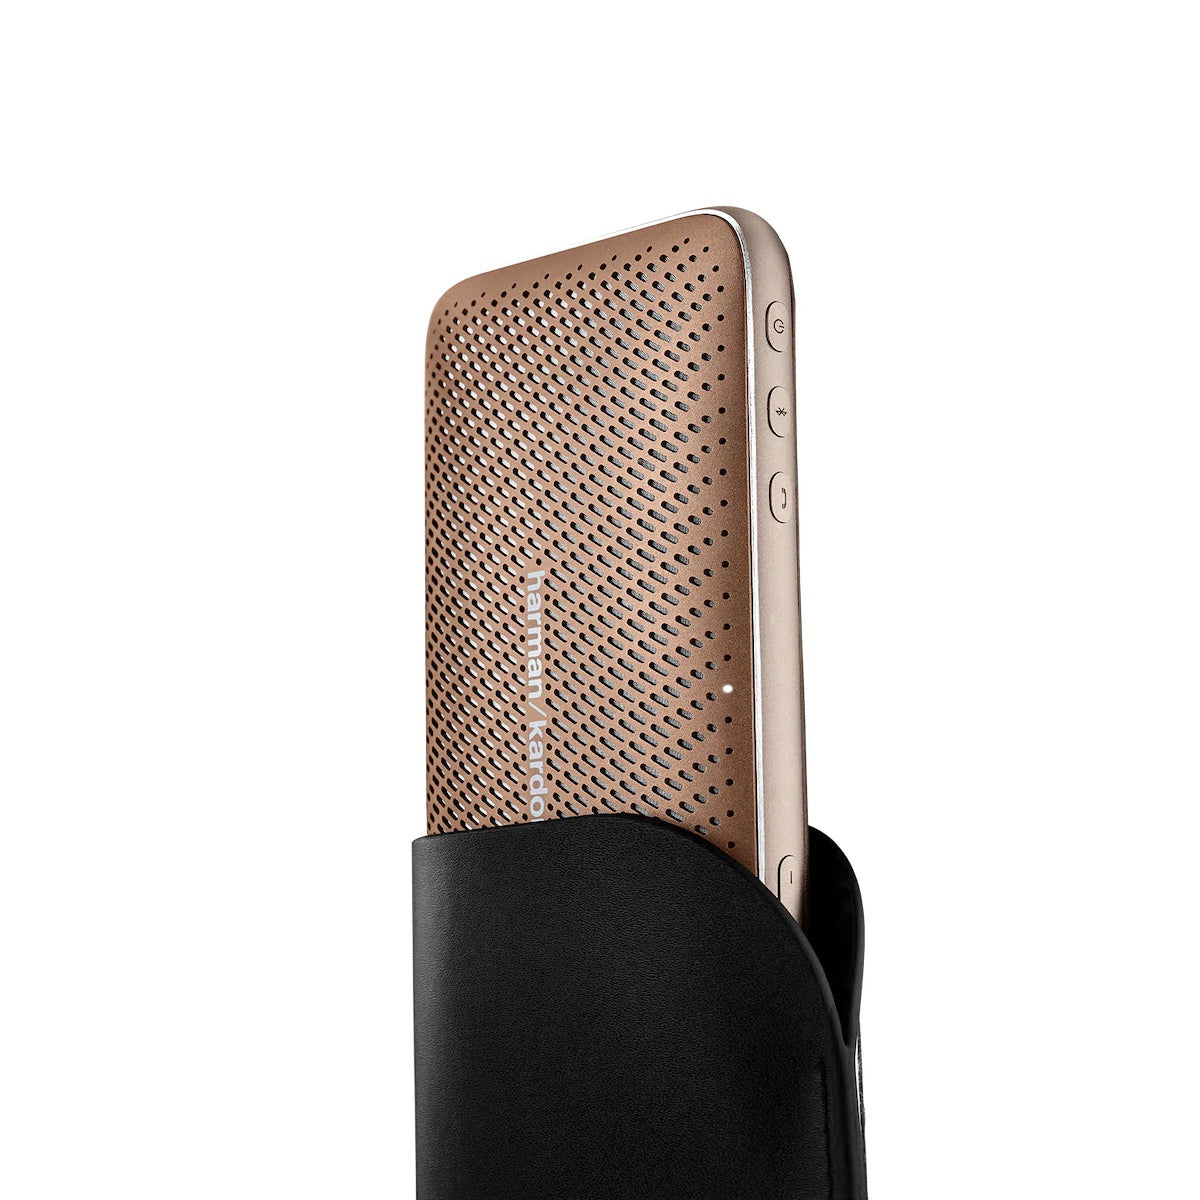 Harman Kardon Esquire Mini 2 - Portable Bluetooth Speaker - AVStore